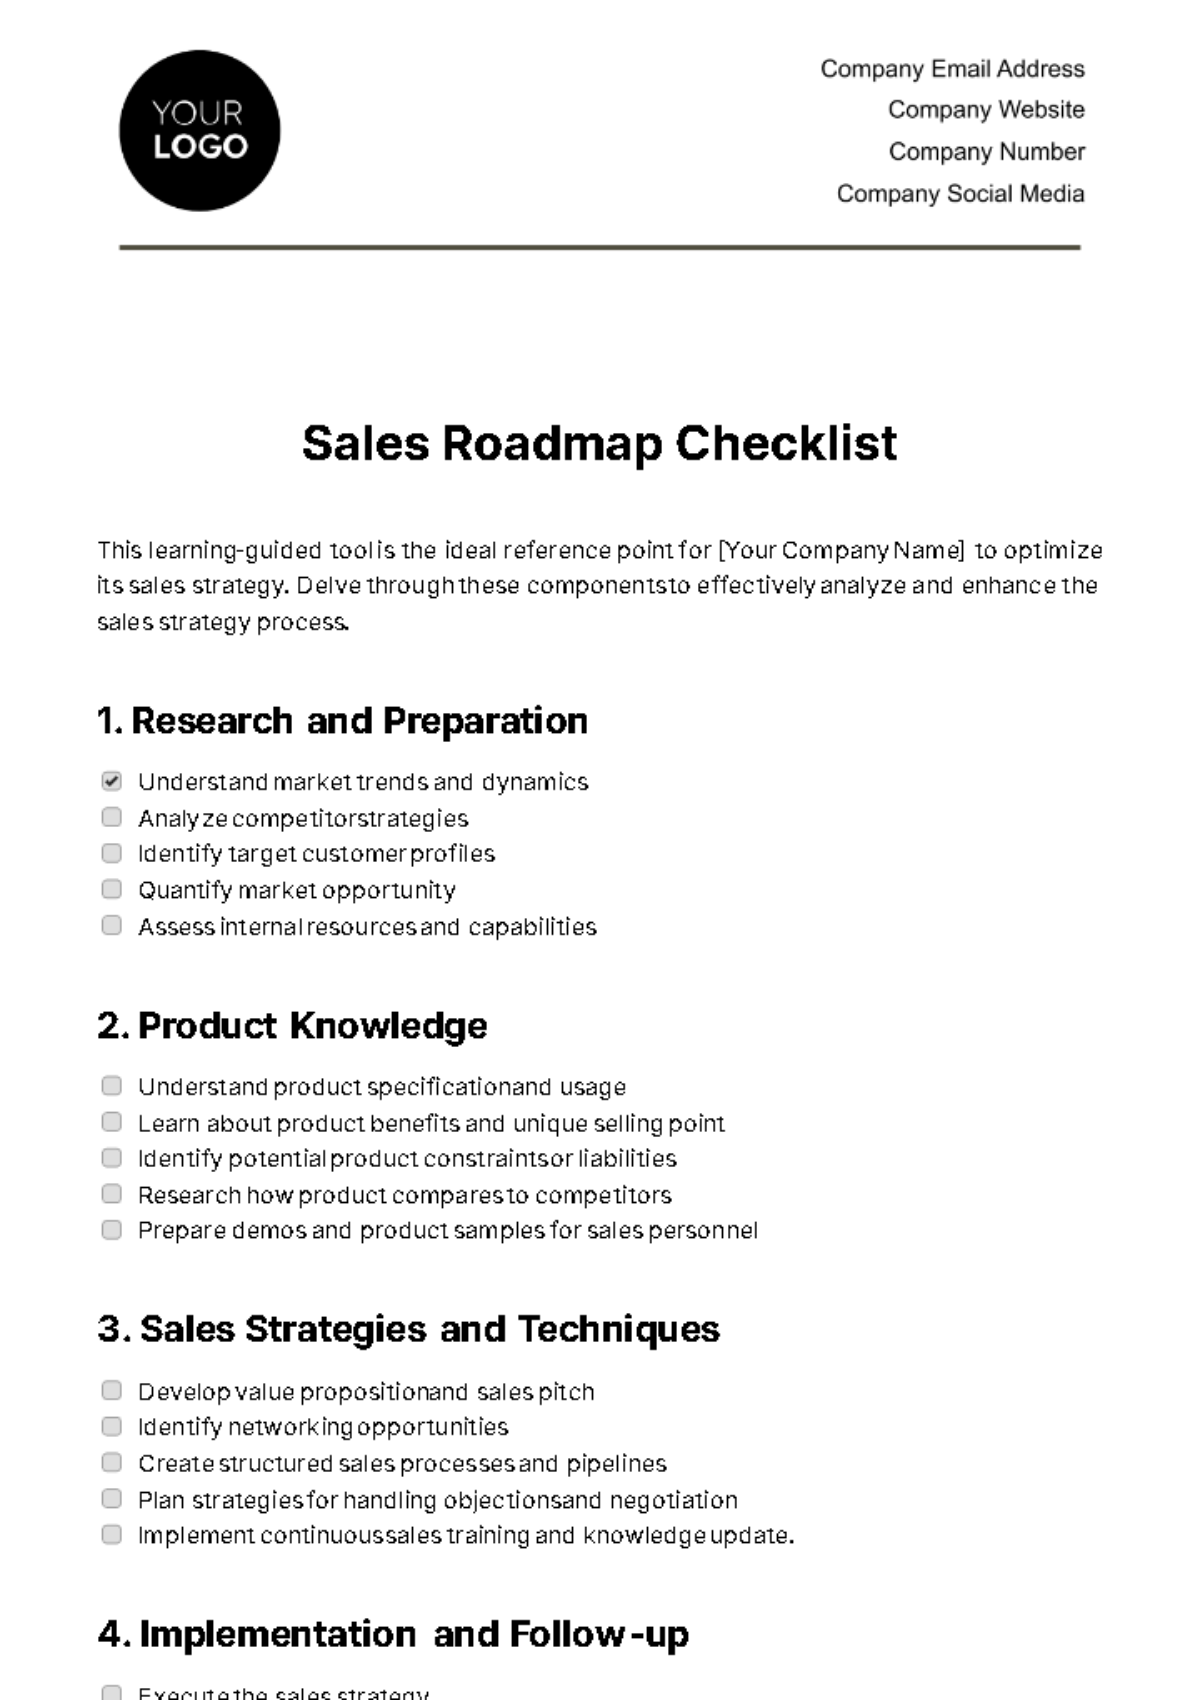 Sales Roadmap Checklist Template